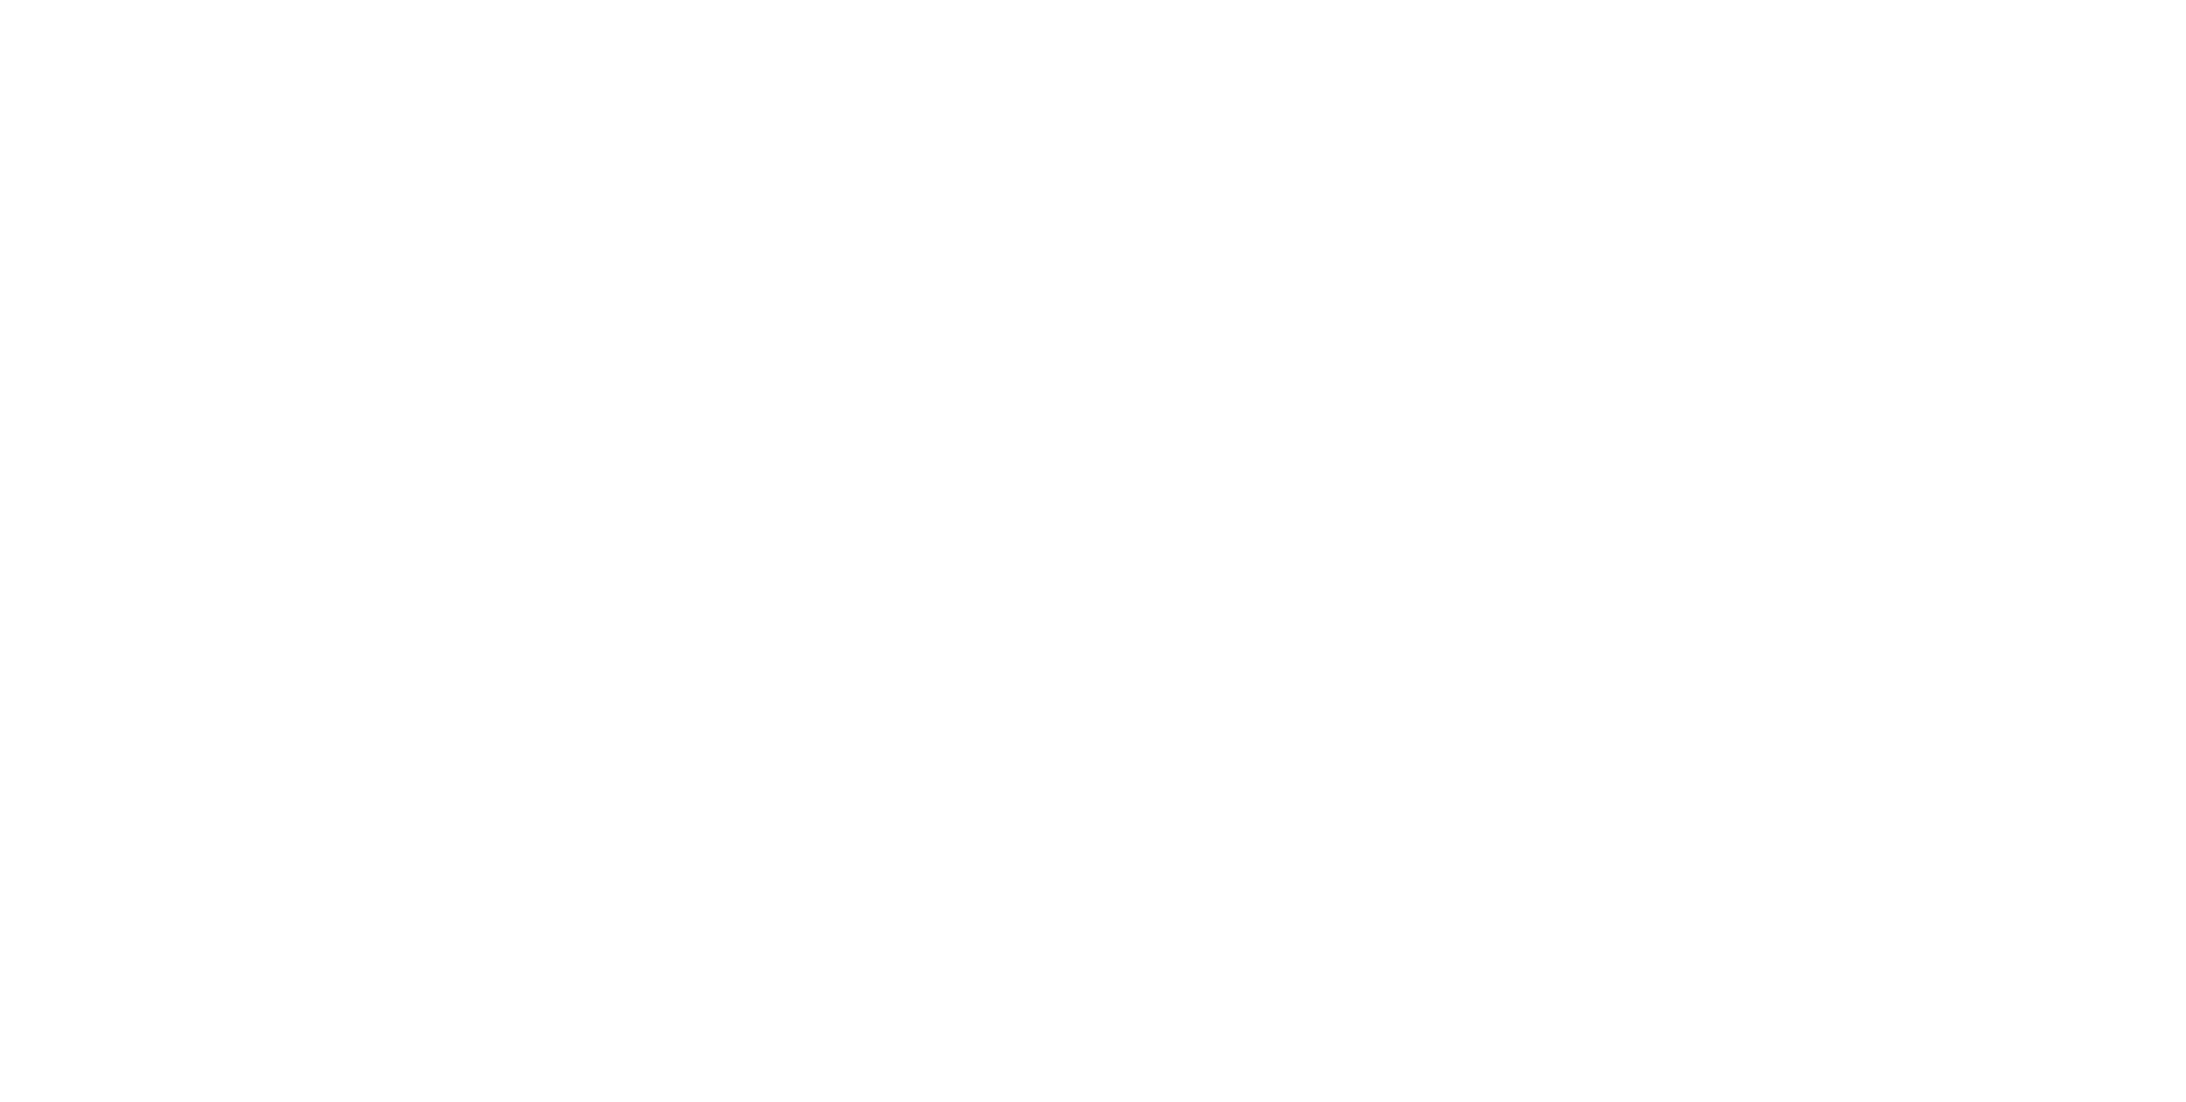 Abiteq Photography